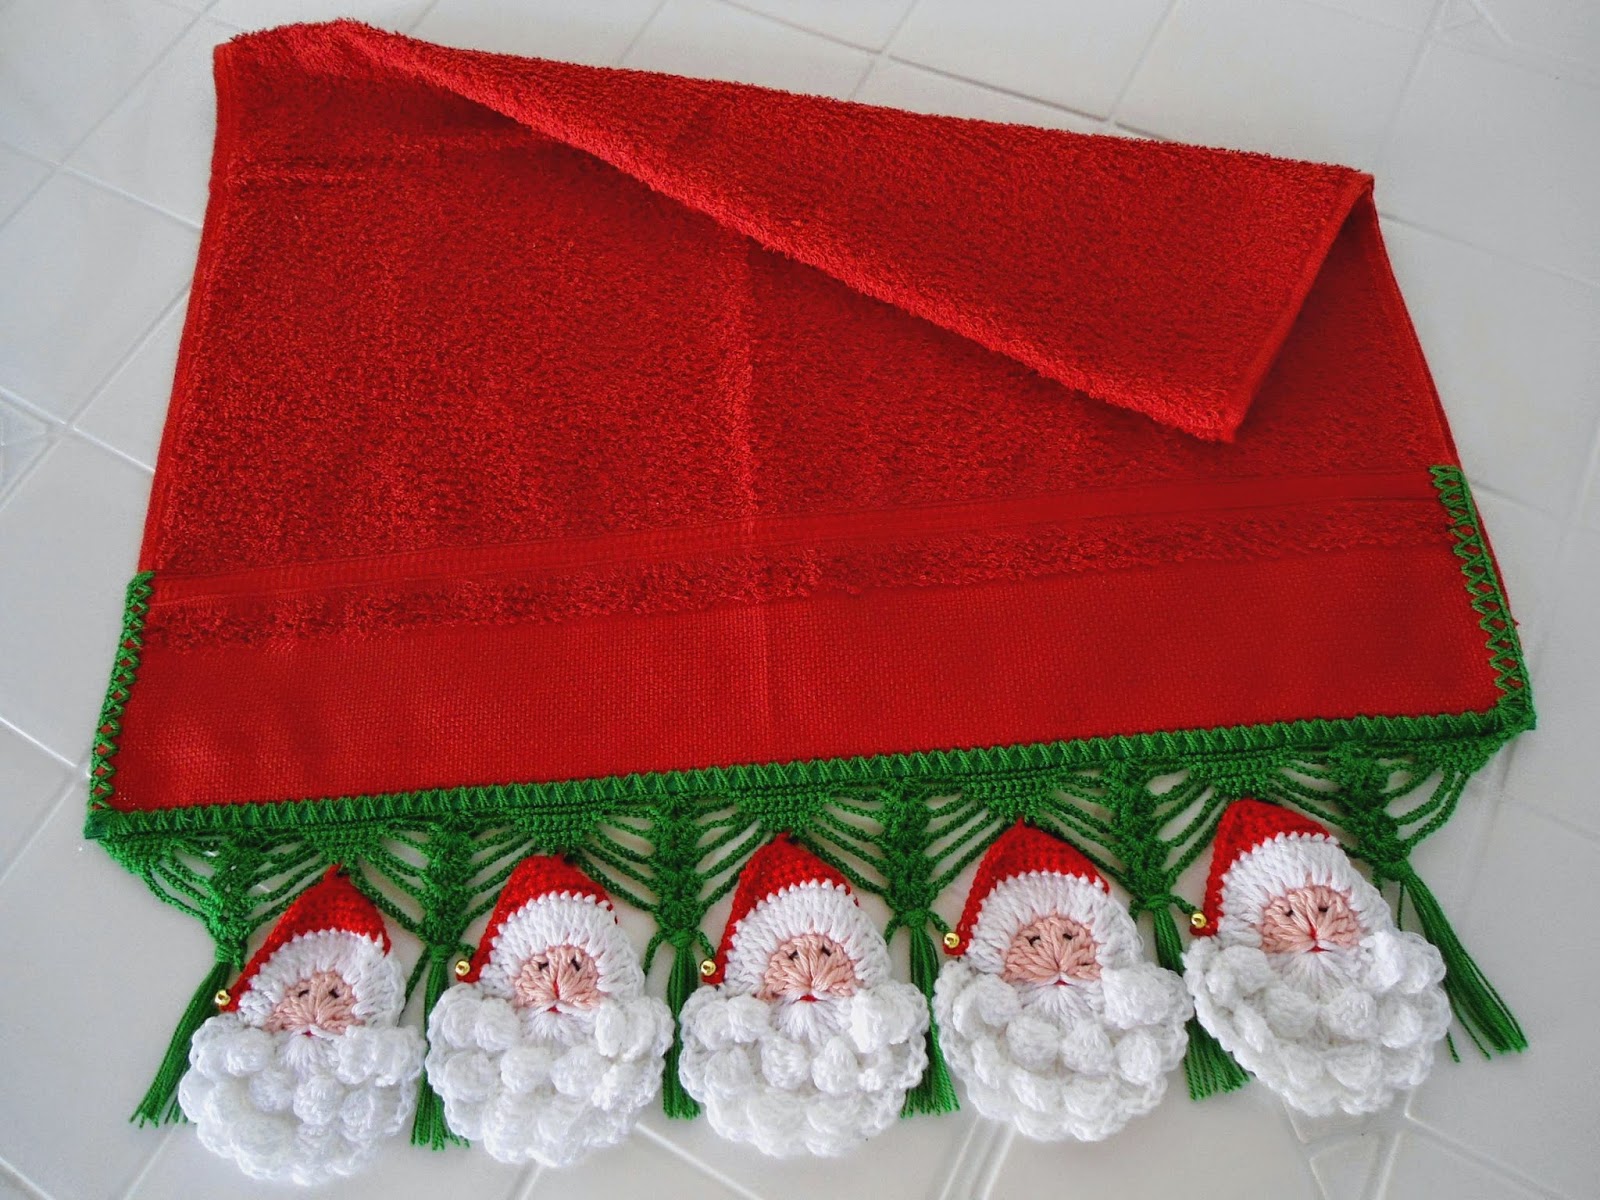 Pingo Doce: Toalha de lavabo com bico de crochê tema Papai Noel.